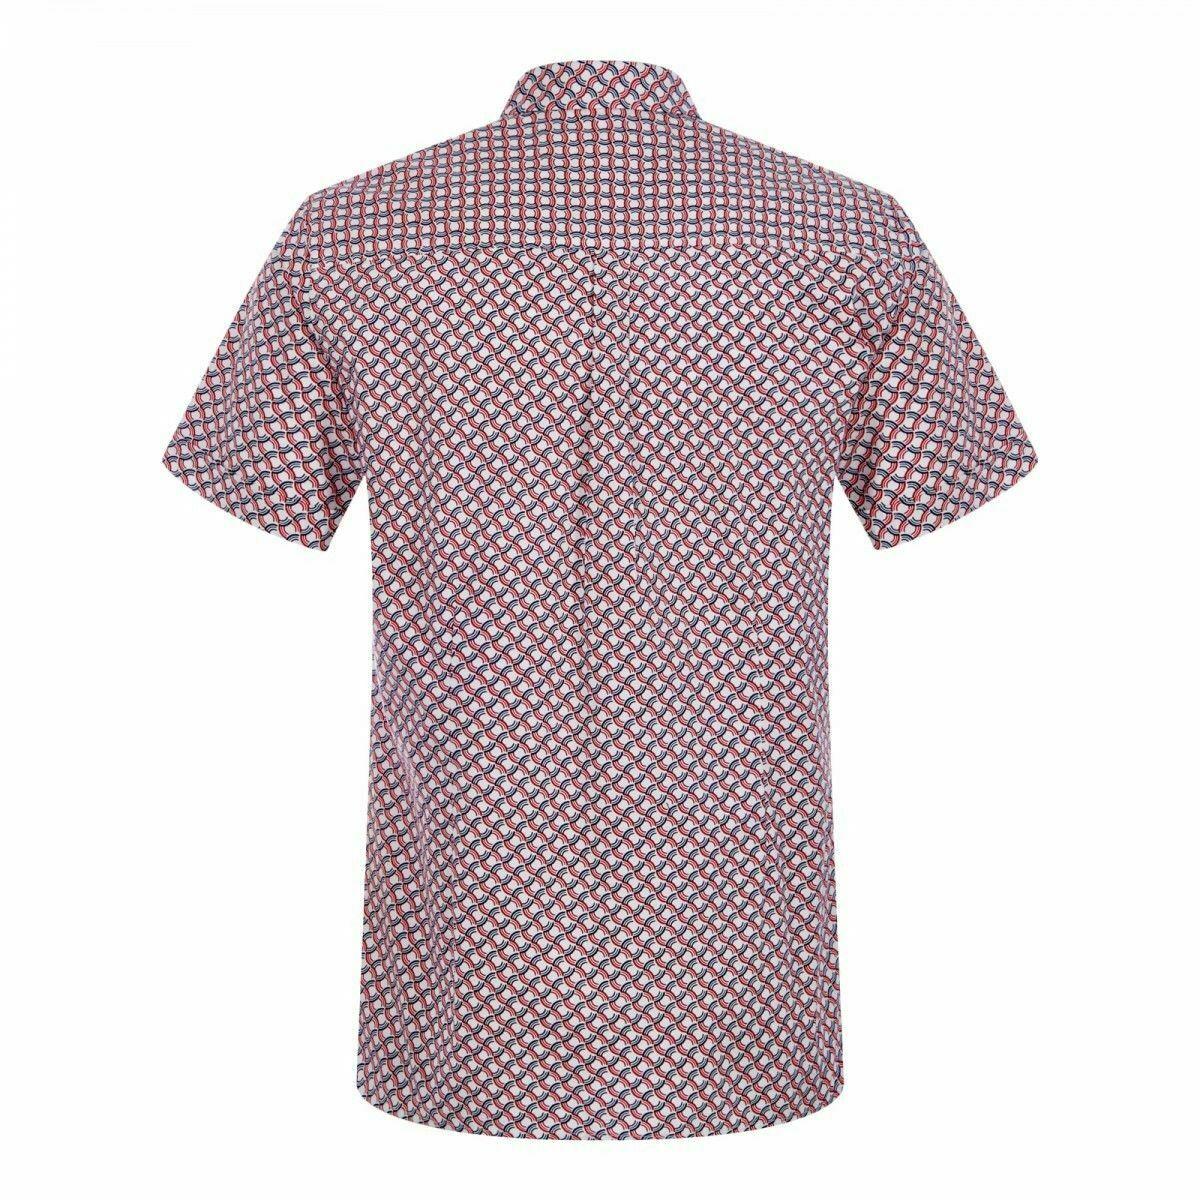 MERC Avery red short-sleeve geo-print cotton shirt size medium